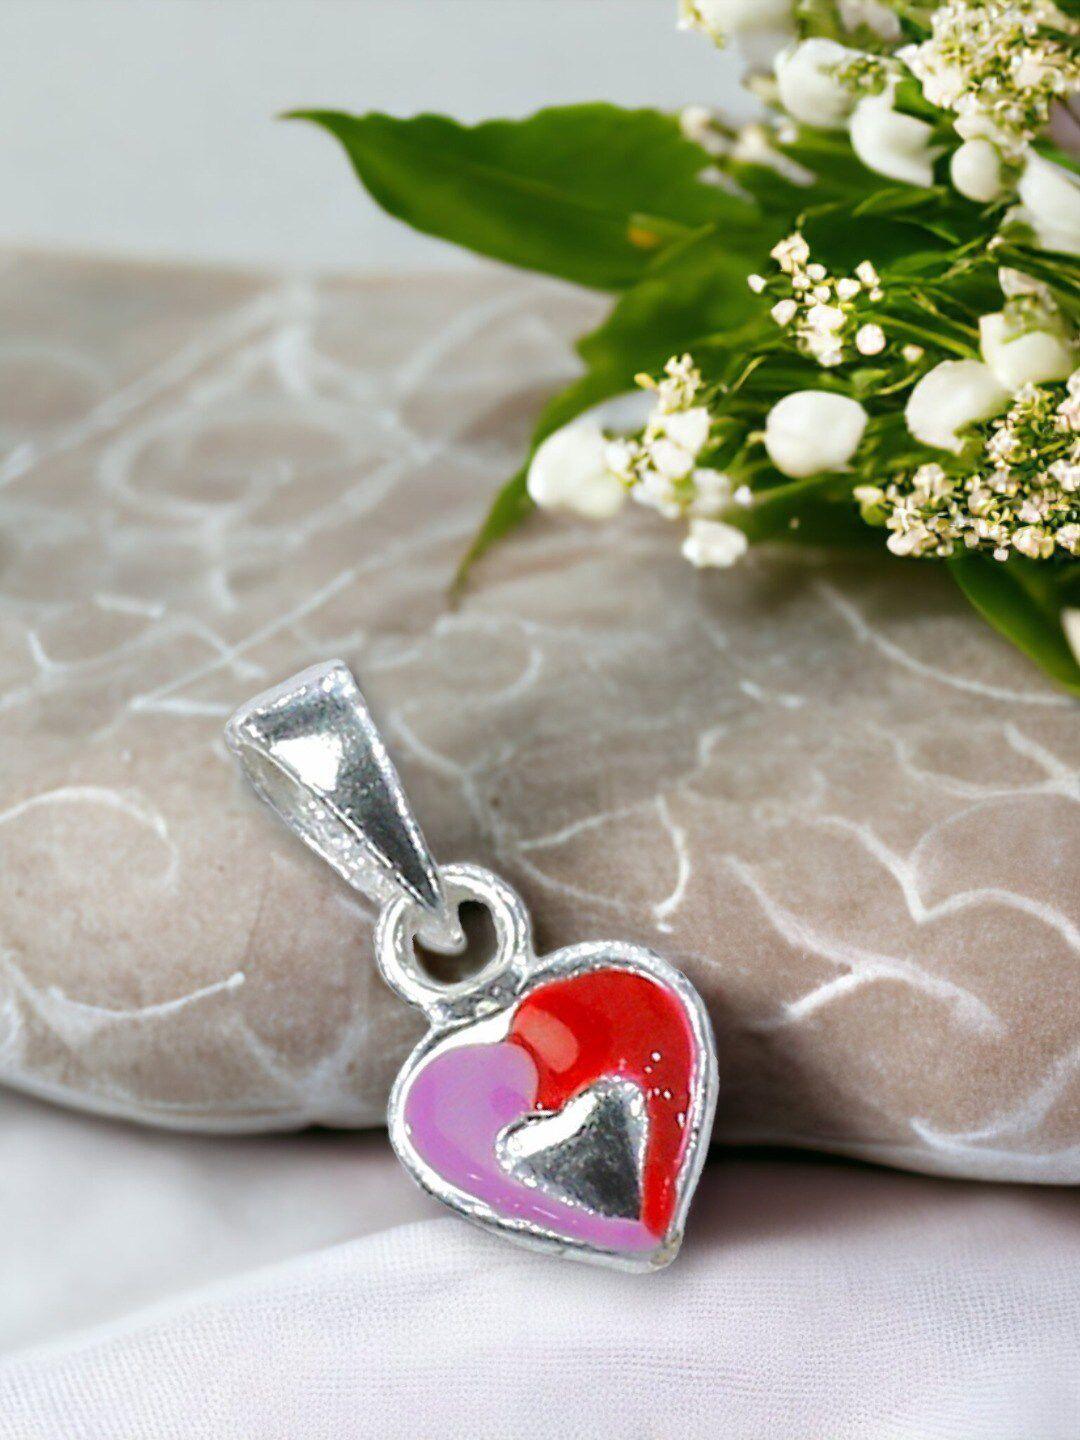 taraash girls 925 sterling silver enamel heart-shaped pendant